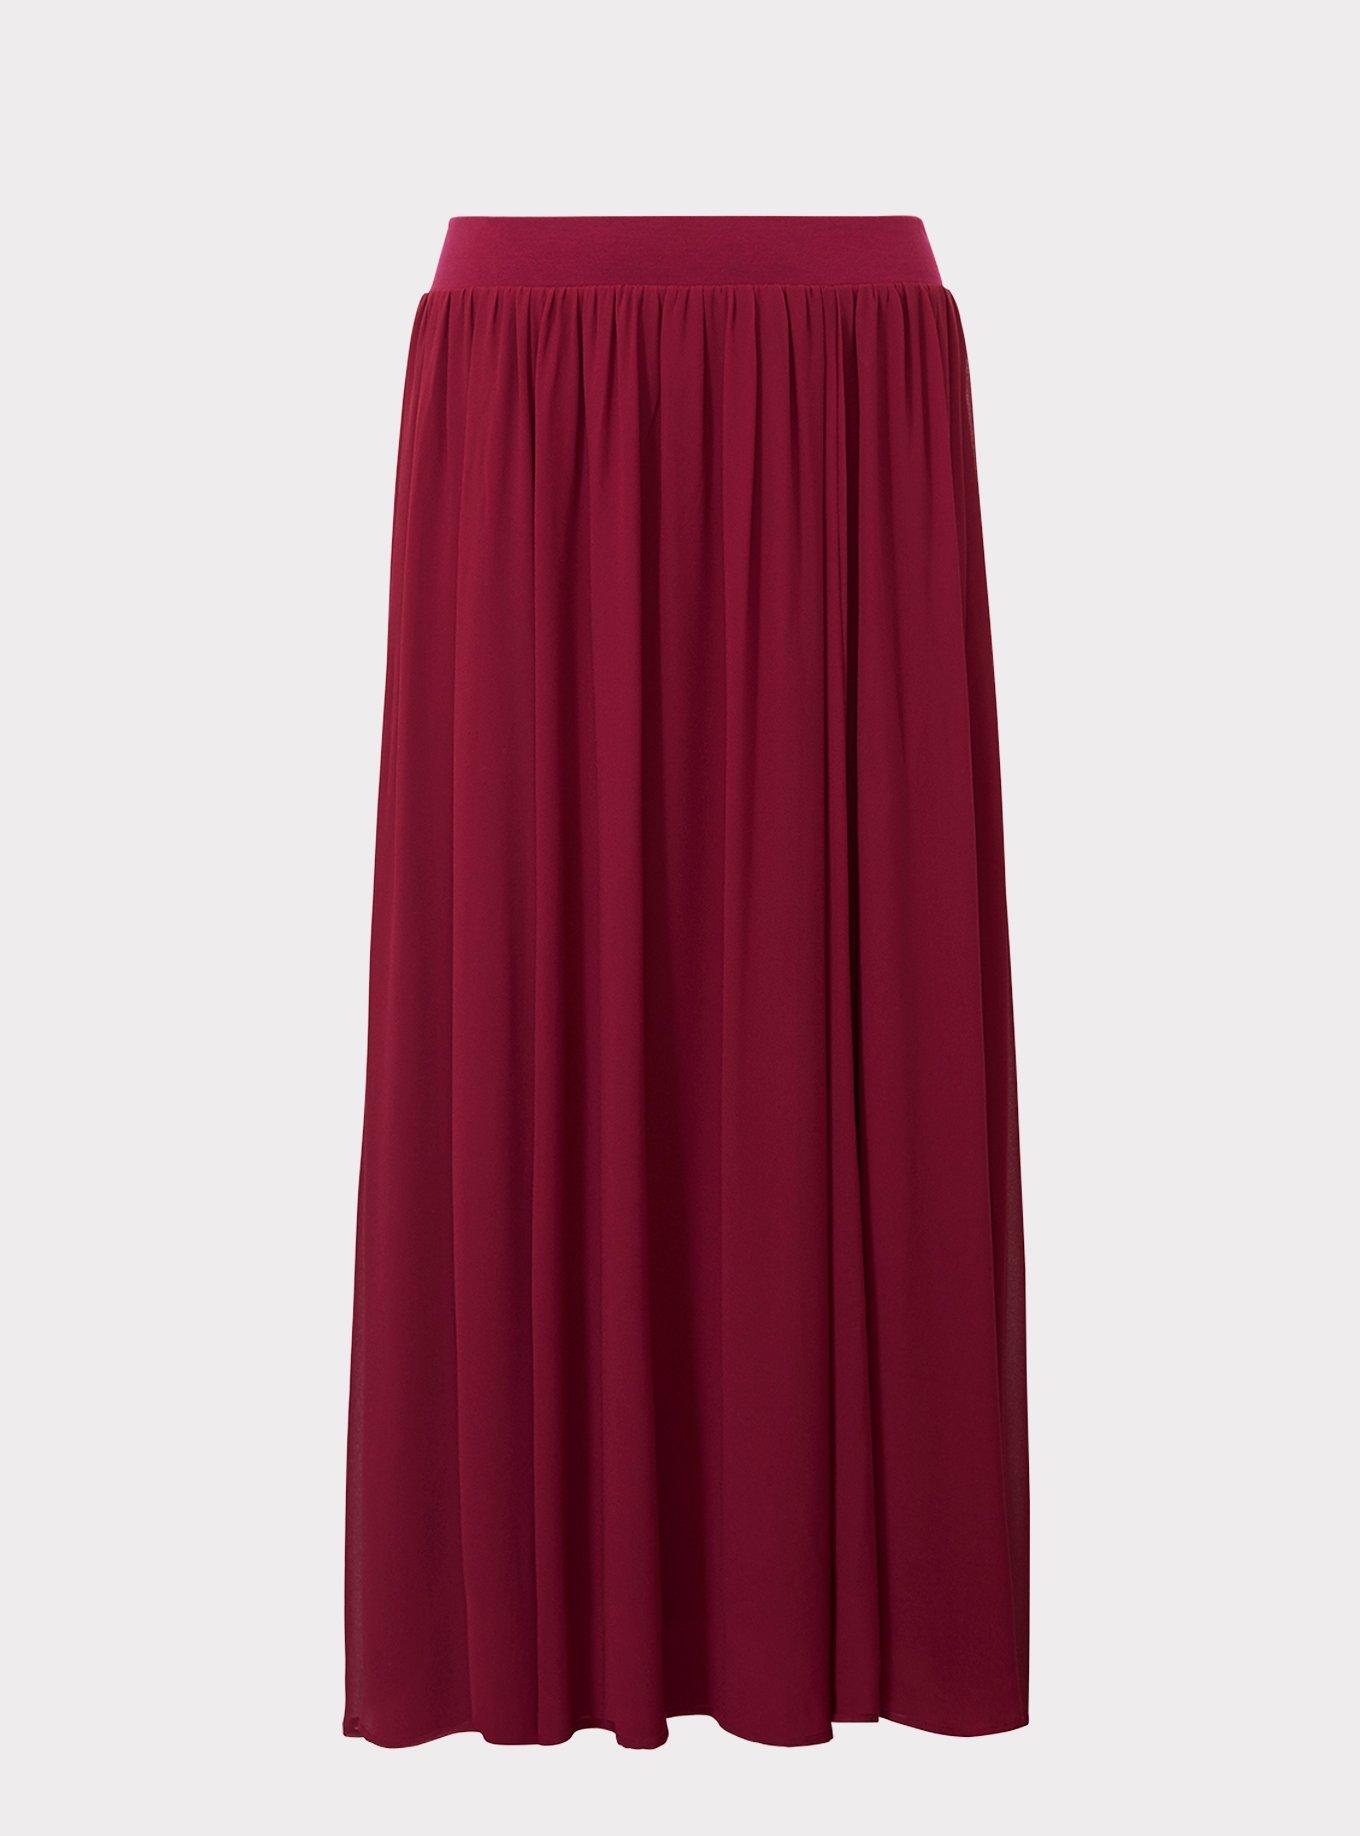 Plus Size - Red Chiffon Maxi Skirt - Torrid